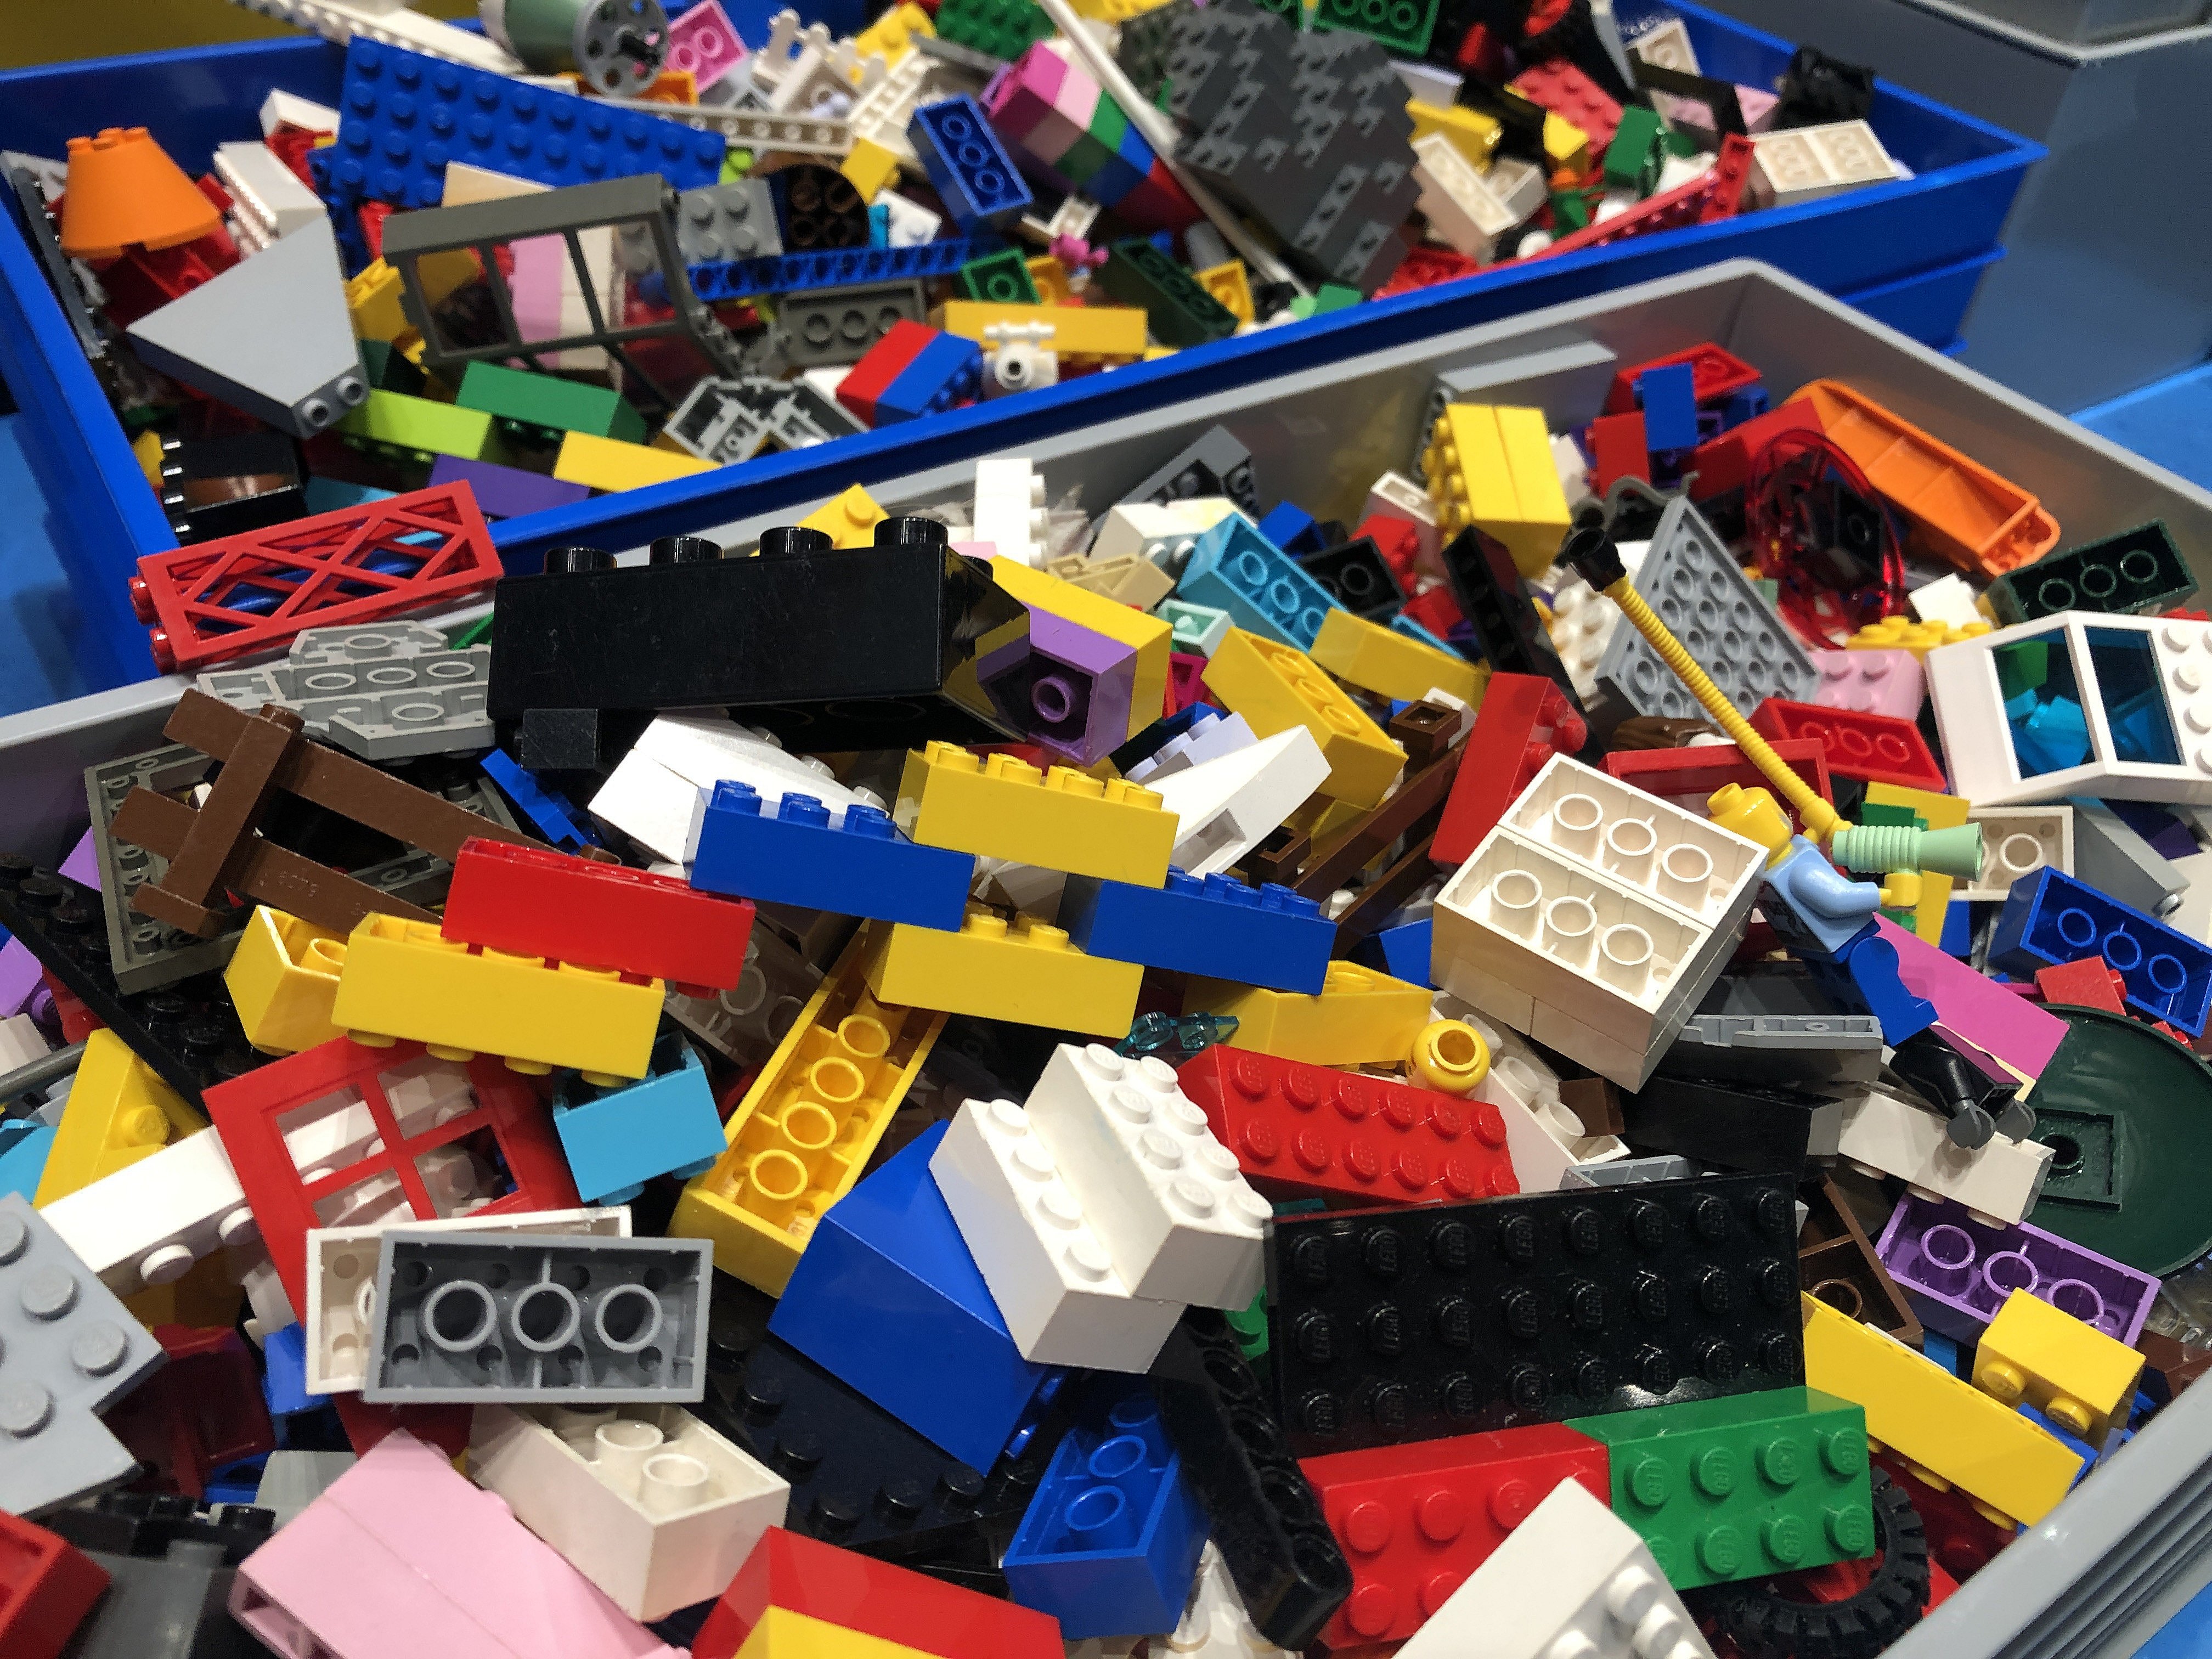 Margaret Mitchell Raffinaderi Måske Nyt rekordoverskud fra Lego | TV SYD